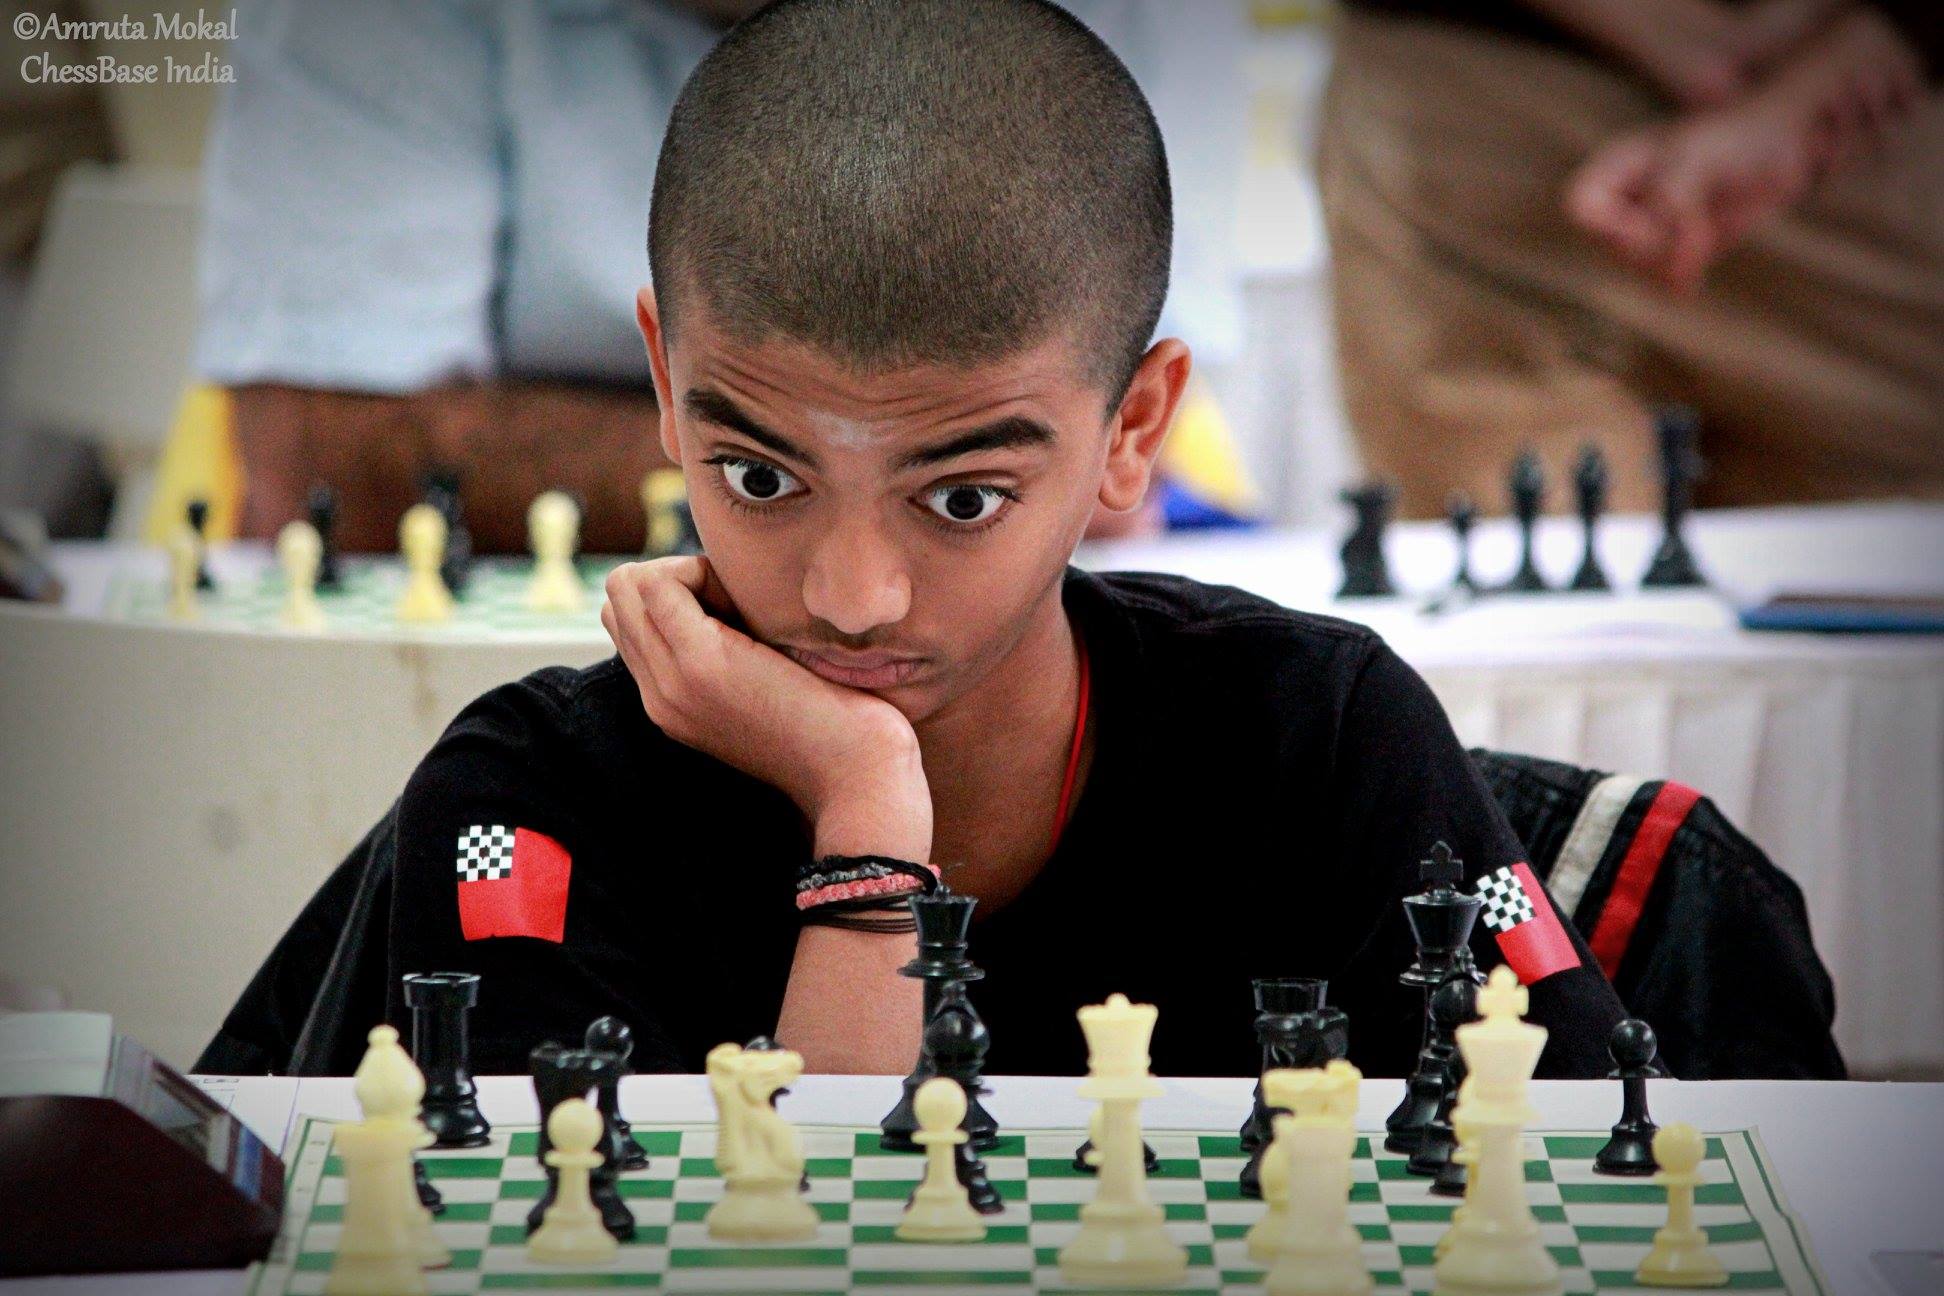 Dommaraju Gukesh player profile - ChessBase Players